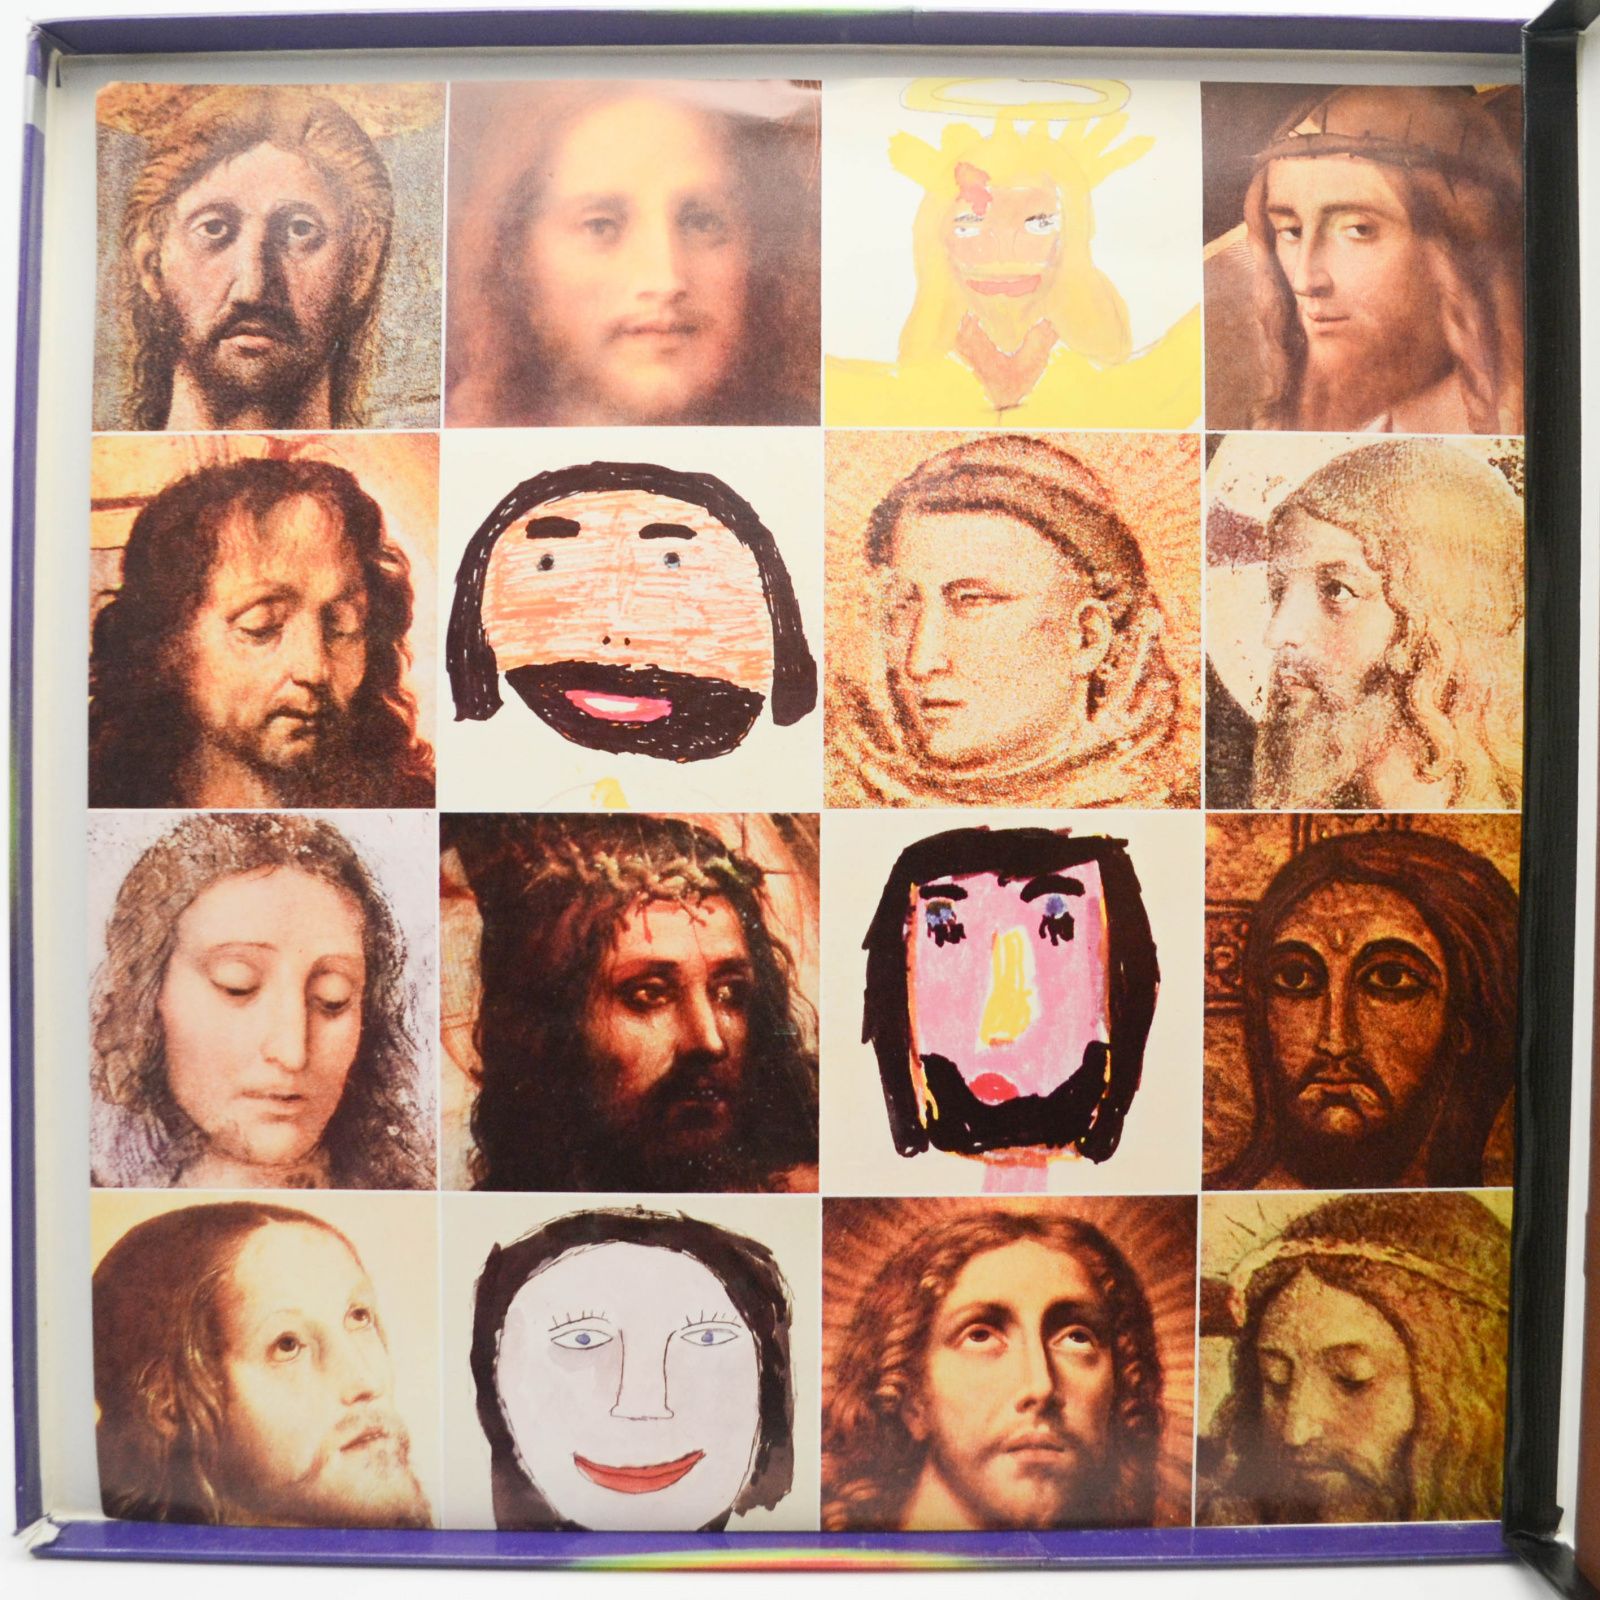 Various — Jesus Christ Superstar (2LP, Box-set, booklet), 1970